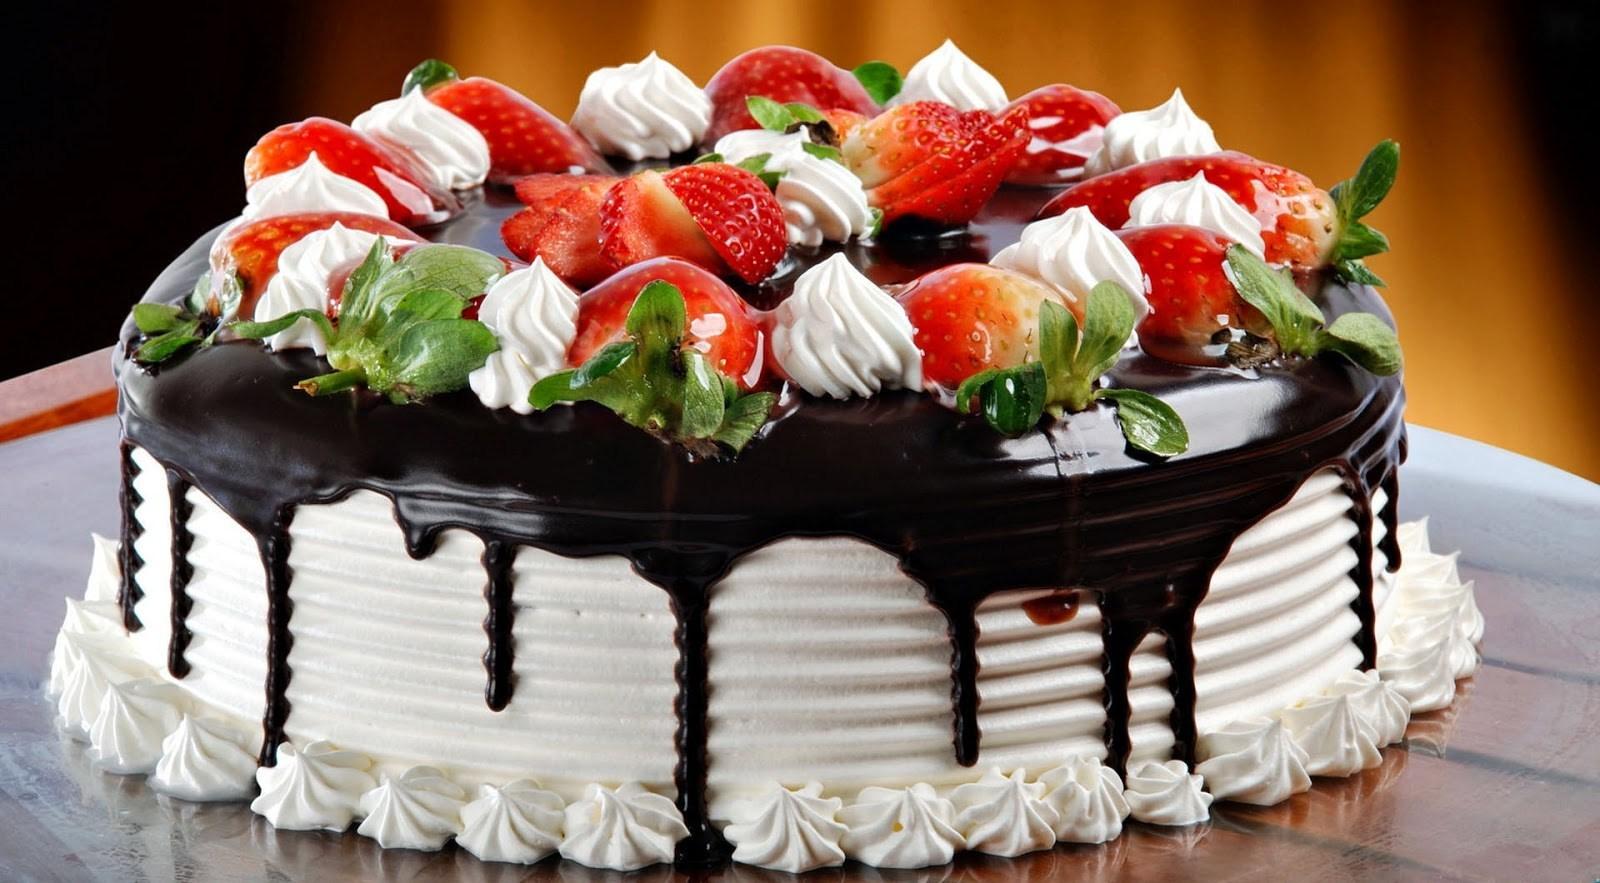 Sweet & Yummy Birthday Cake Image & HD Wallpaper 2017